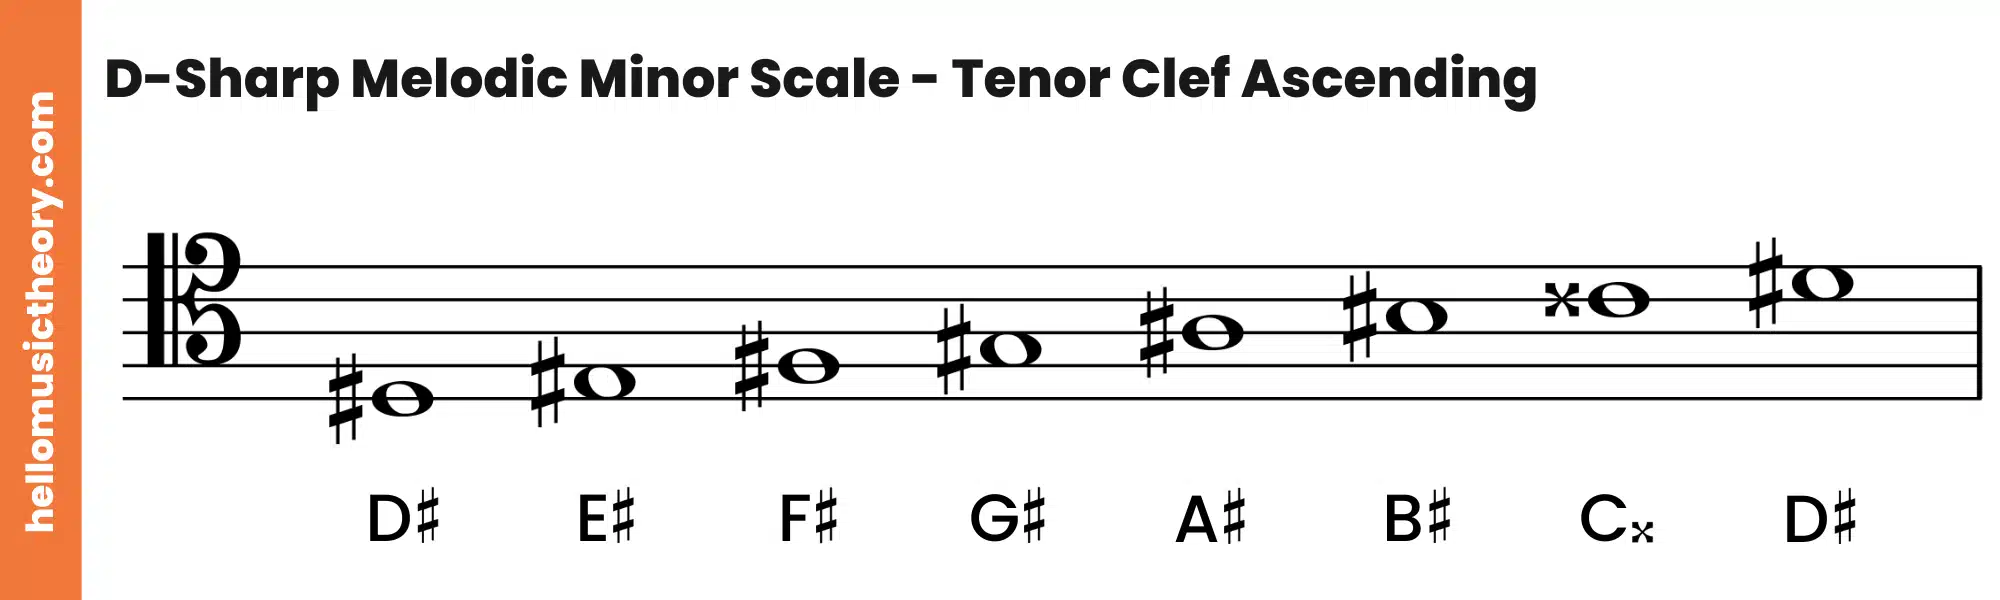 D-Sharp Melodic Minor Scale Tenor Clef Ascending